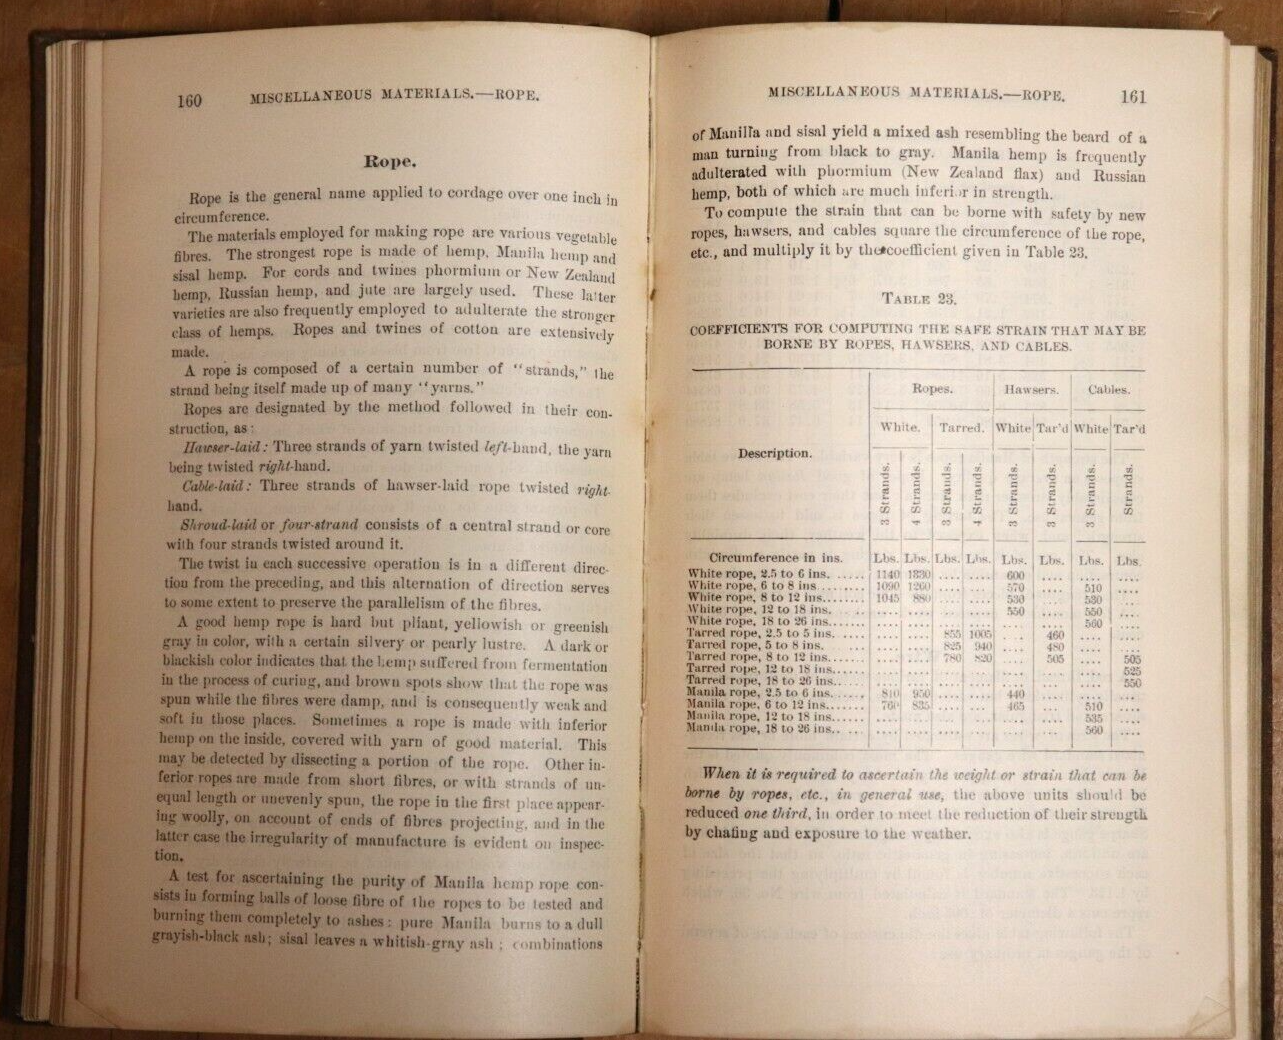 1898 Byrne's Construction Inspectors Pocket Book Rare Antiquarian Book